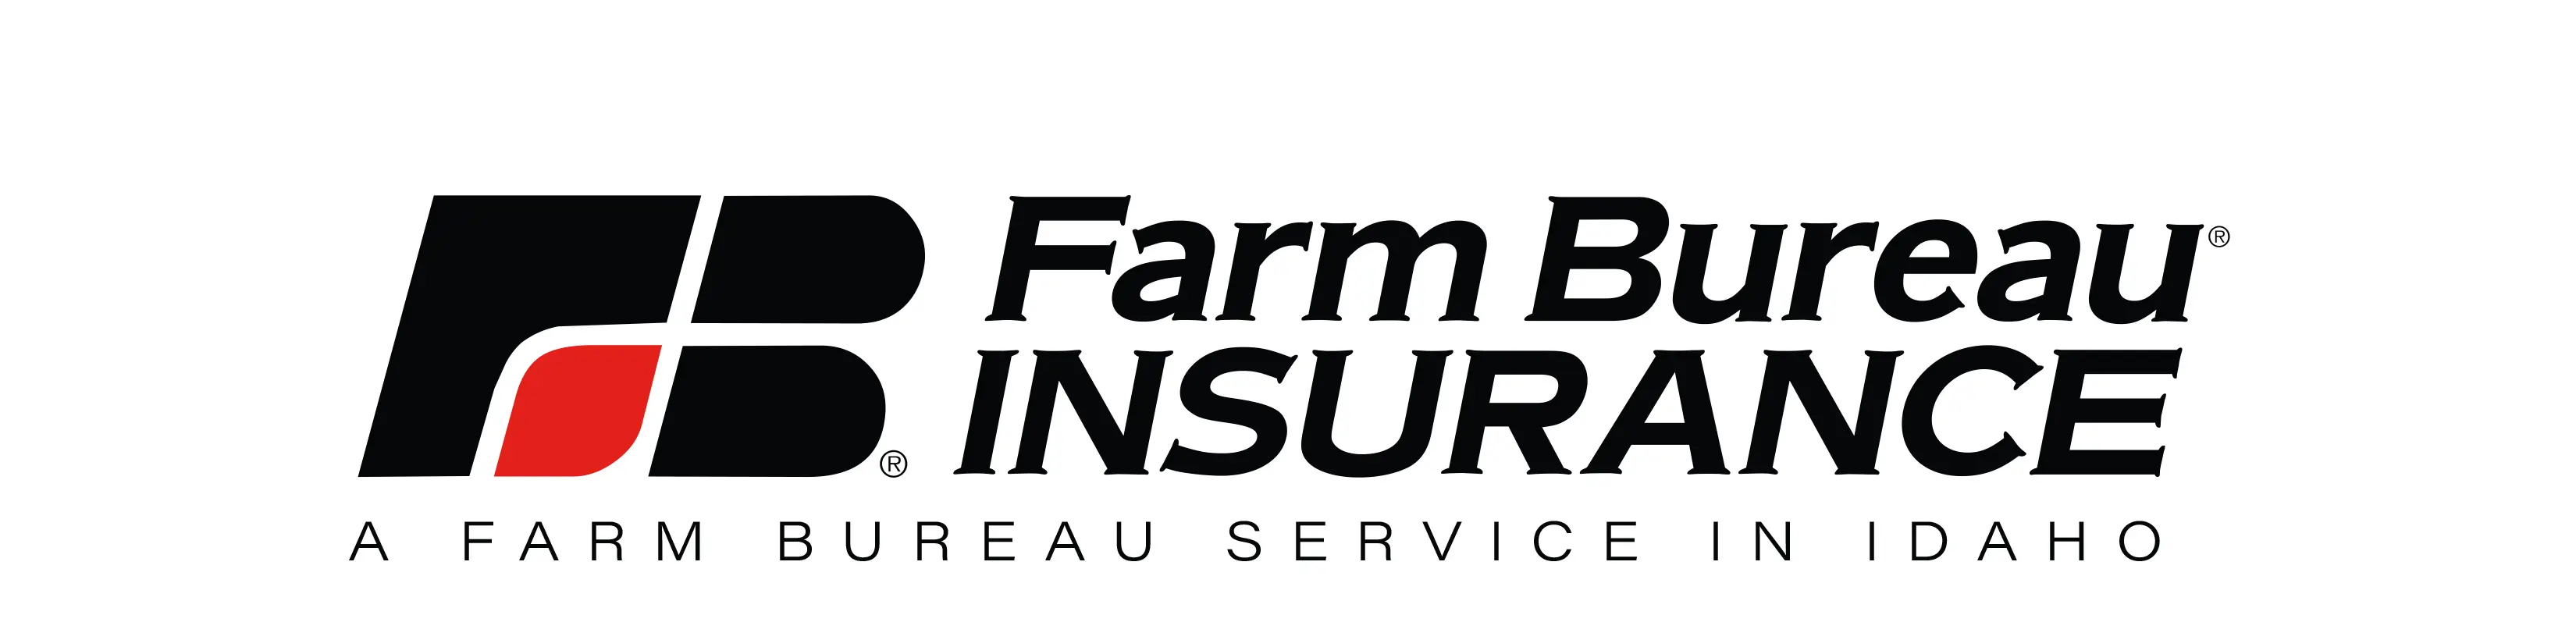 Farm Bureau Insurance of Idaho